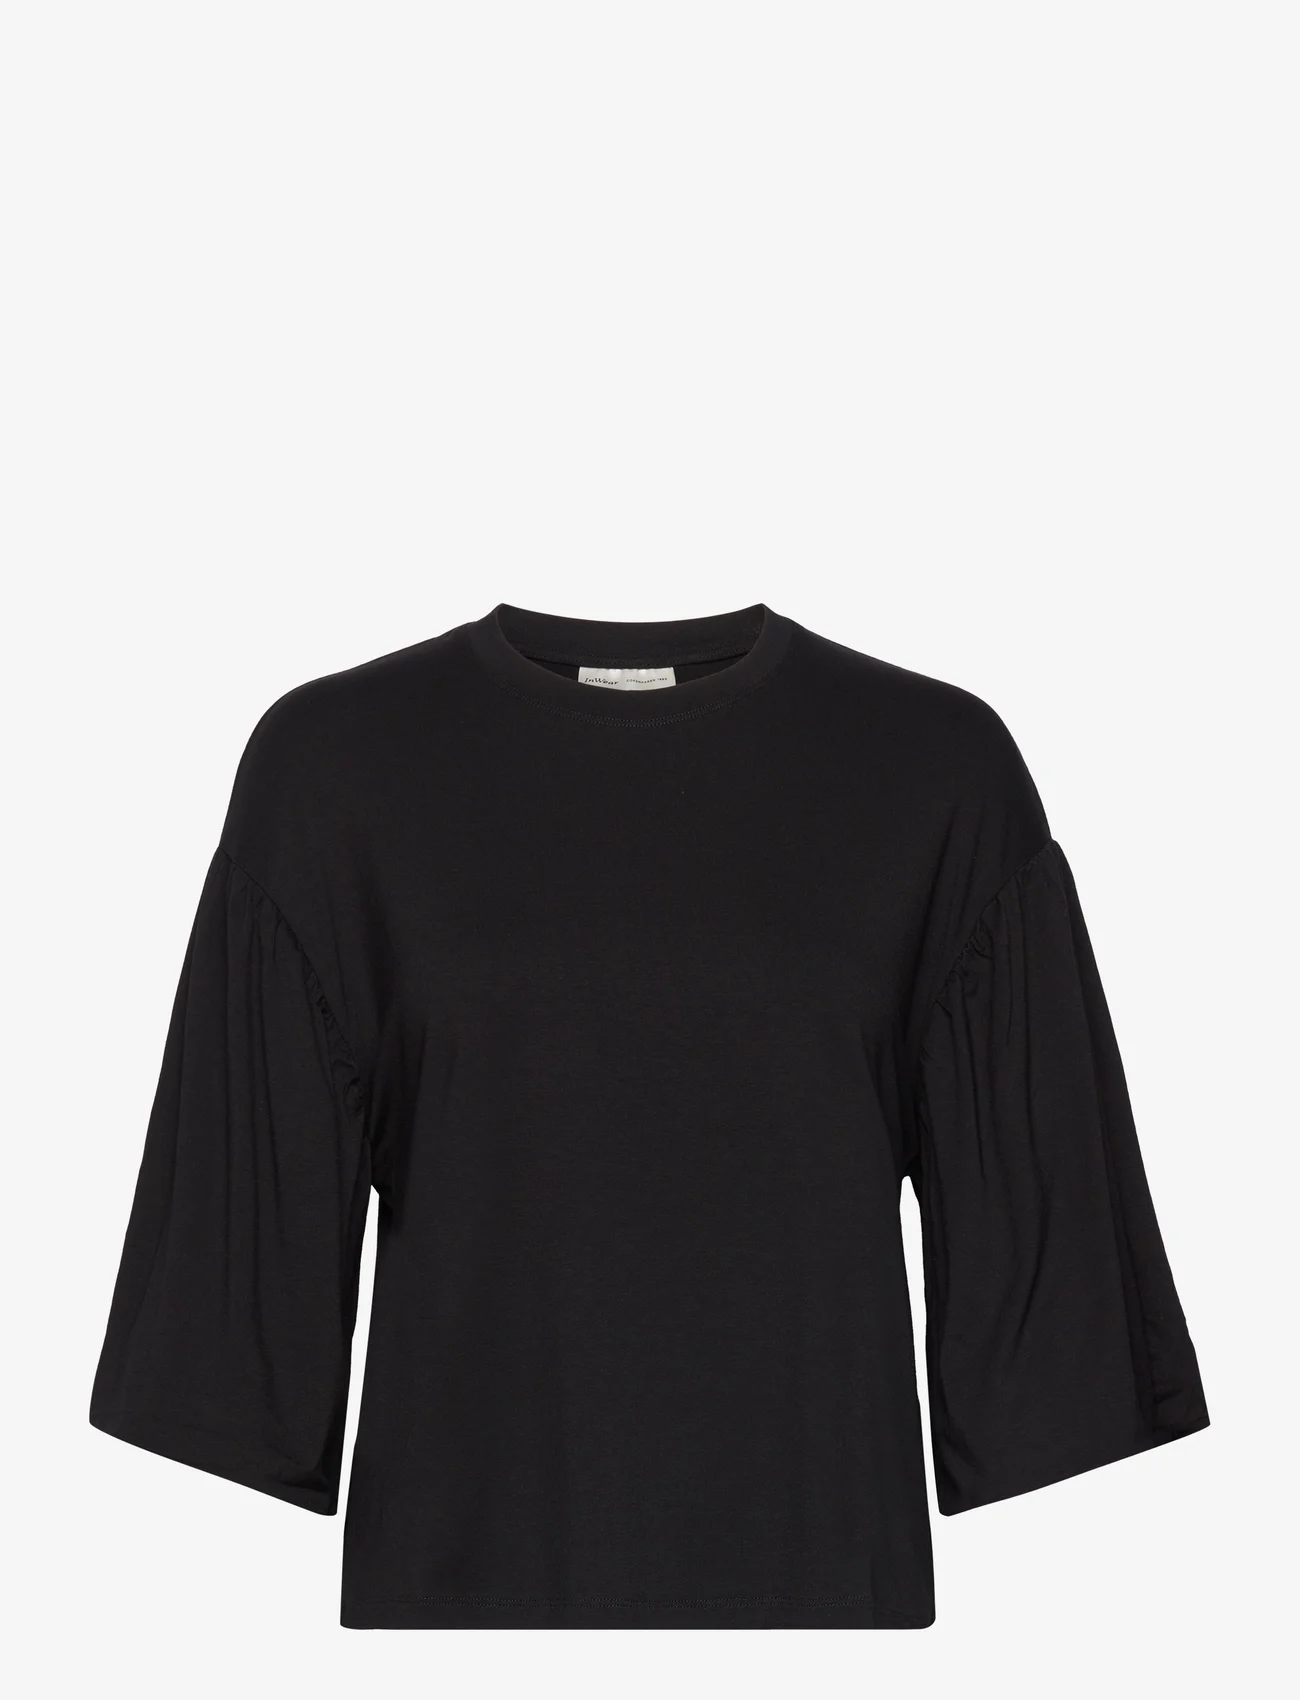 InWear - KaleviIW Top - t-skjorter - black - 0